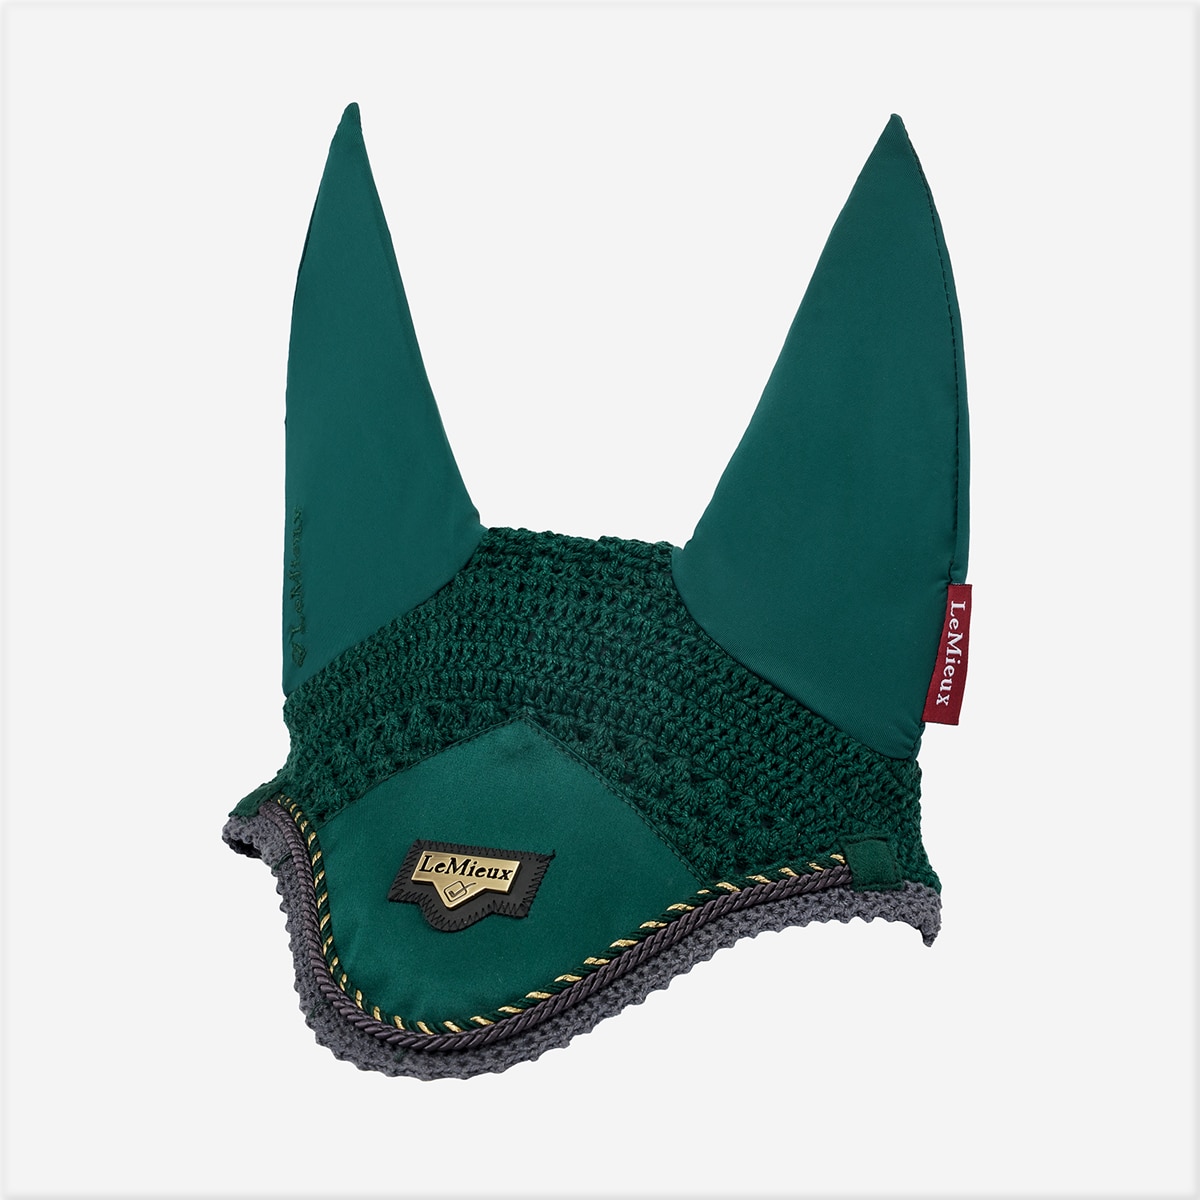 LeMieux Toy Pony Ear Net Peacock Green 